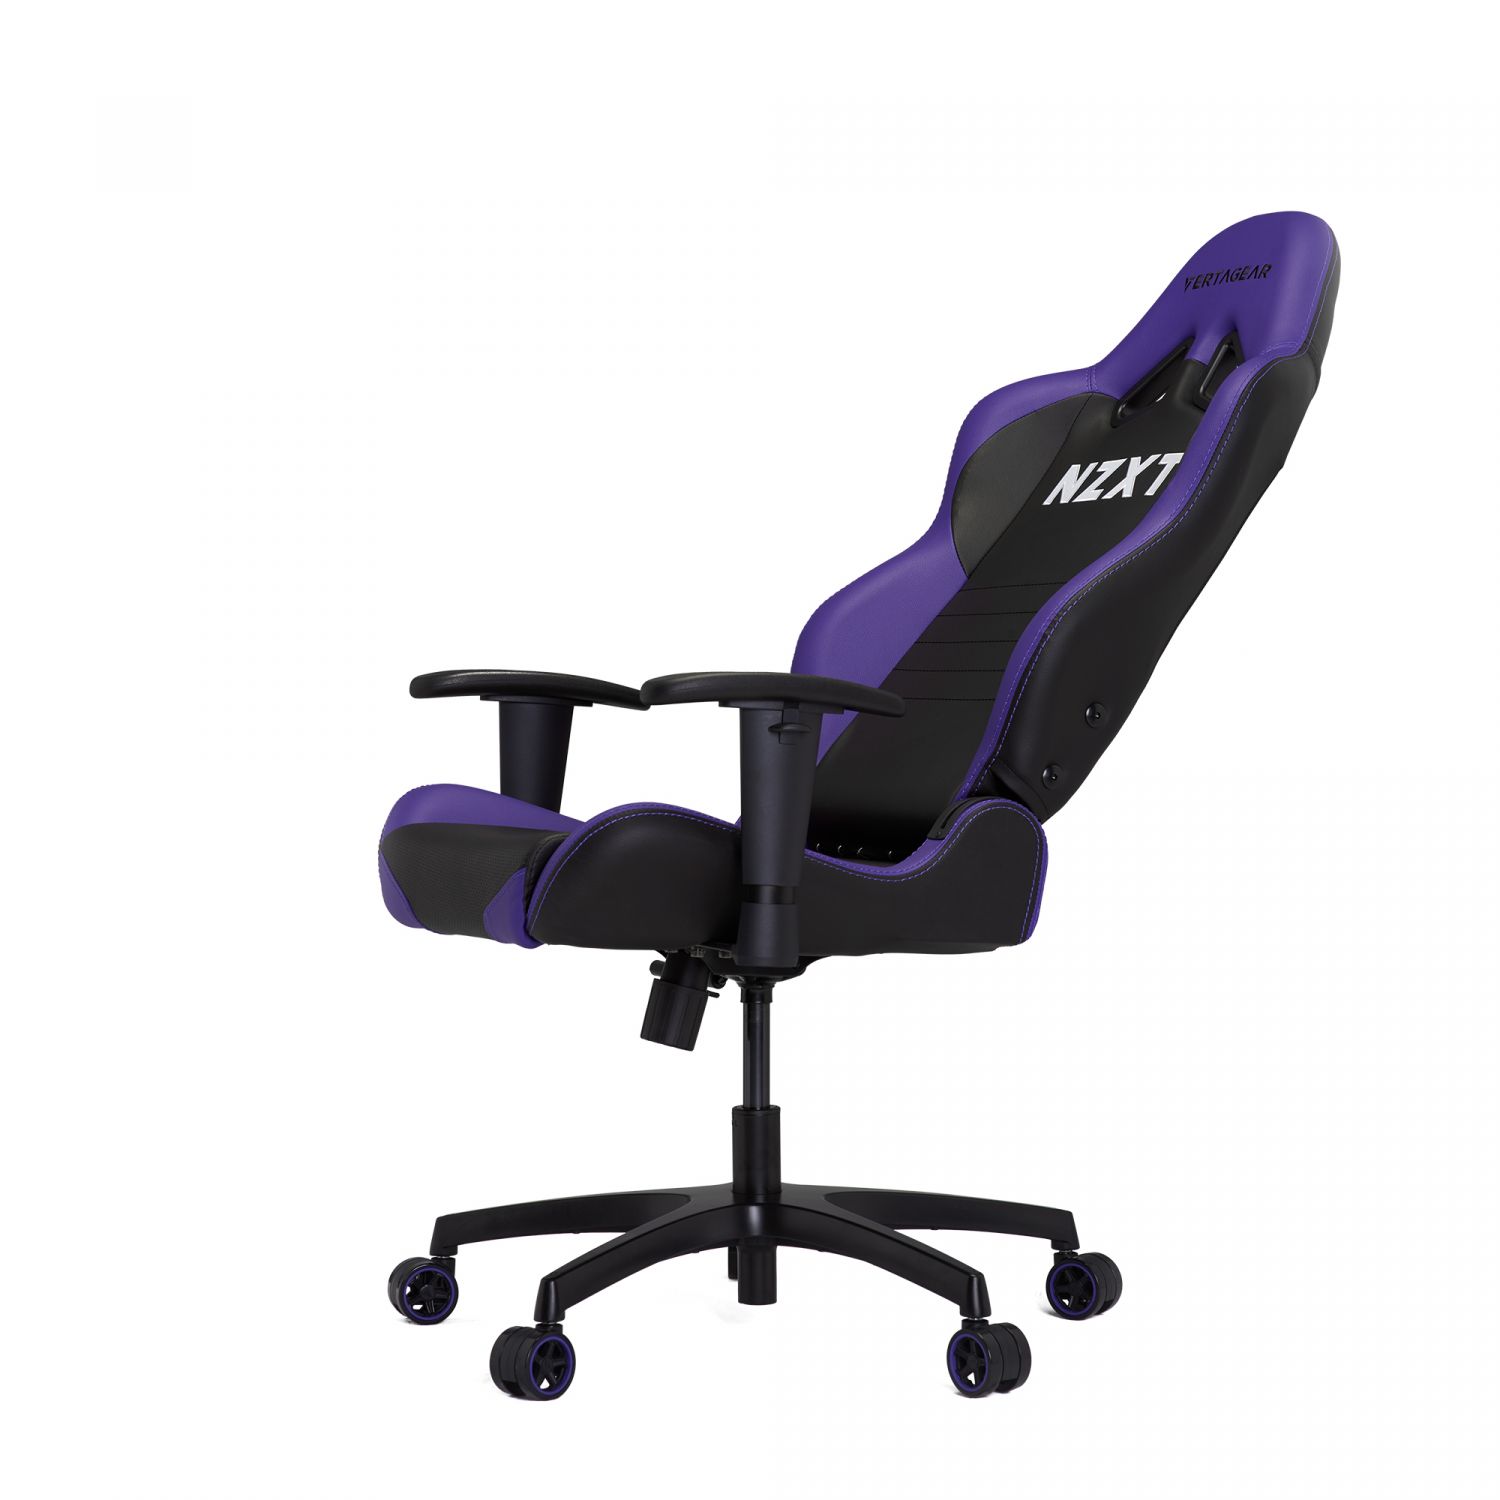 vertagear sl2000 gaming chair blackpurple nzxt edition